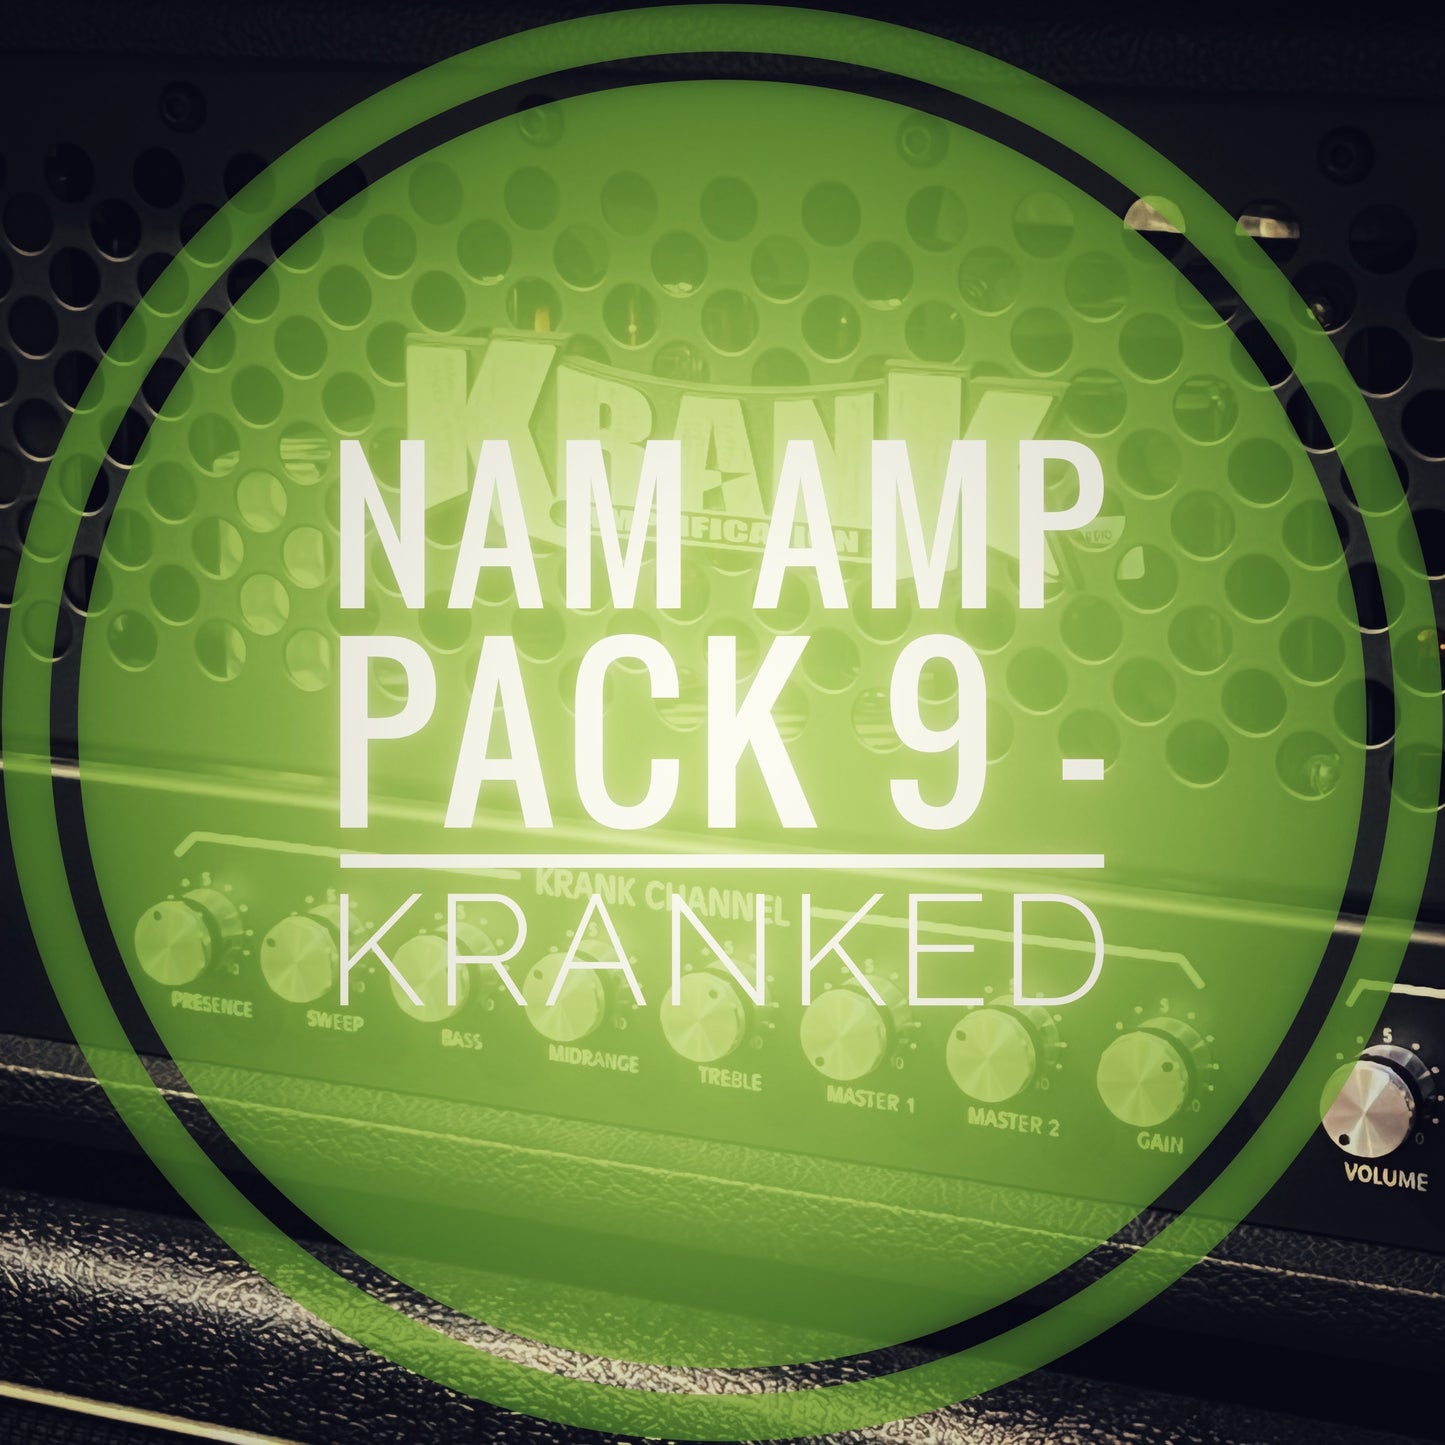 NAM Amp Pack 9 - Kranked